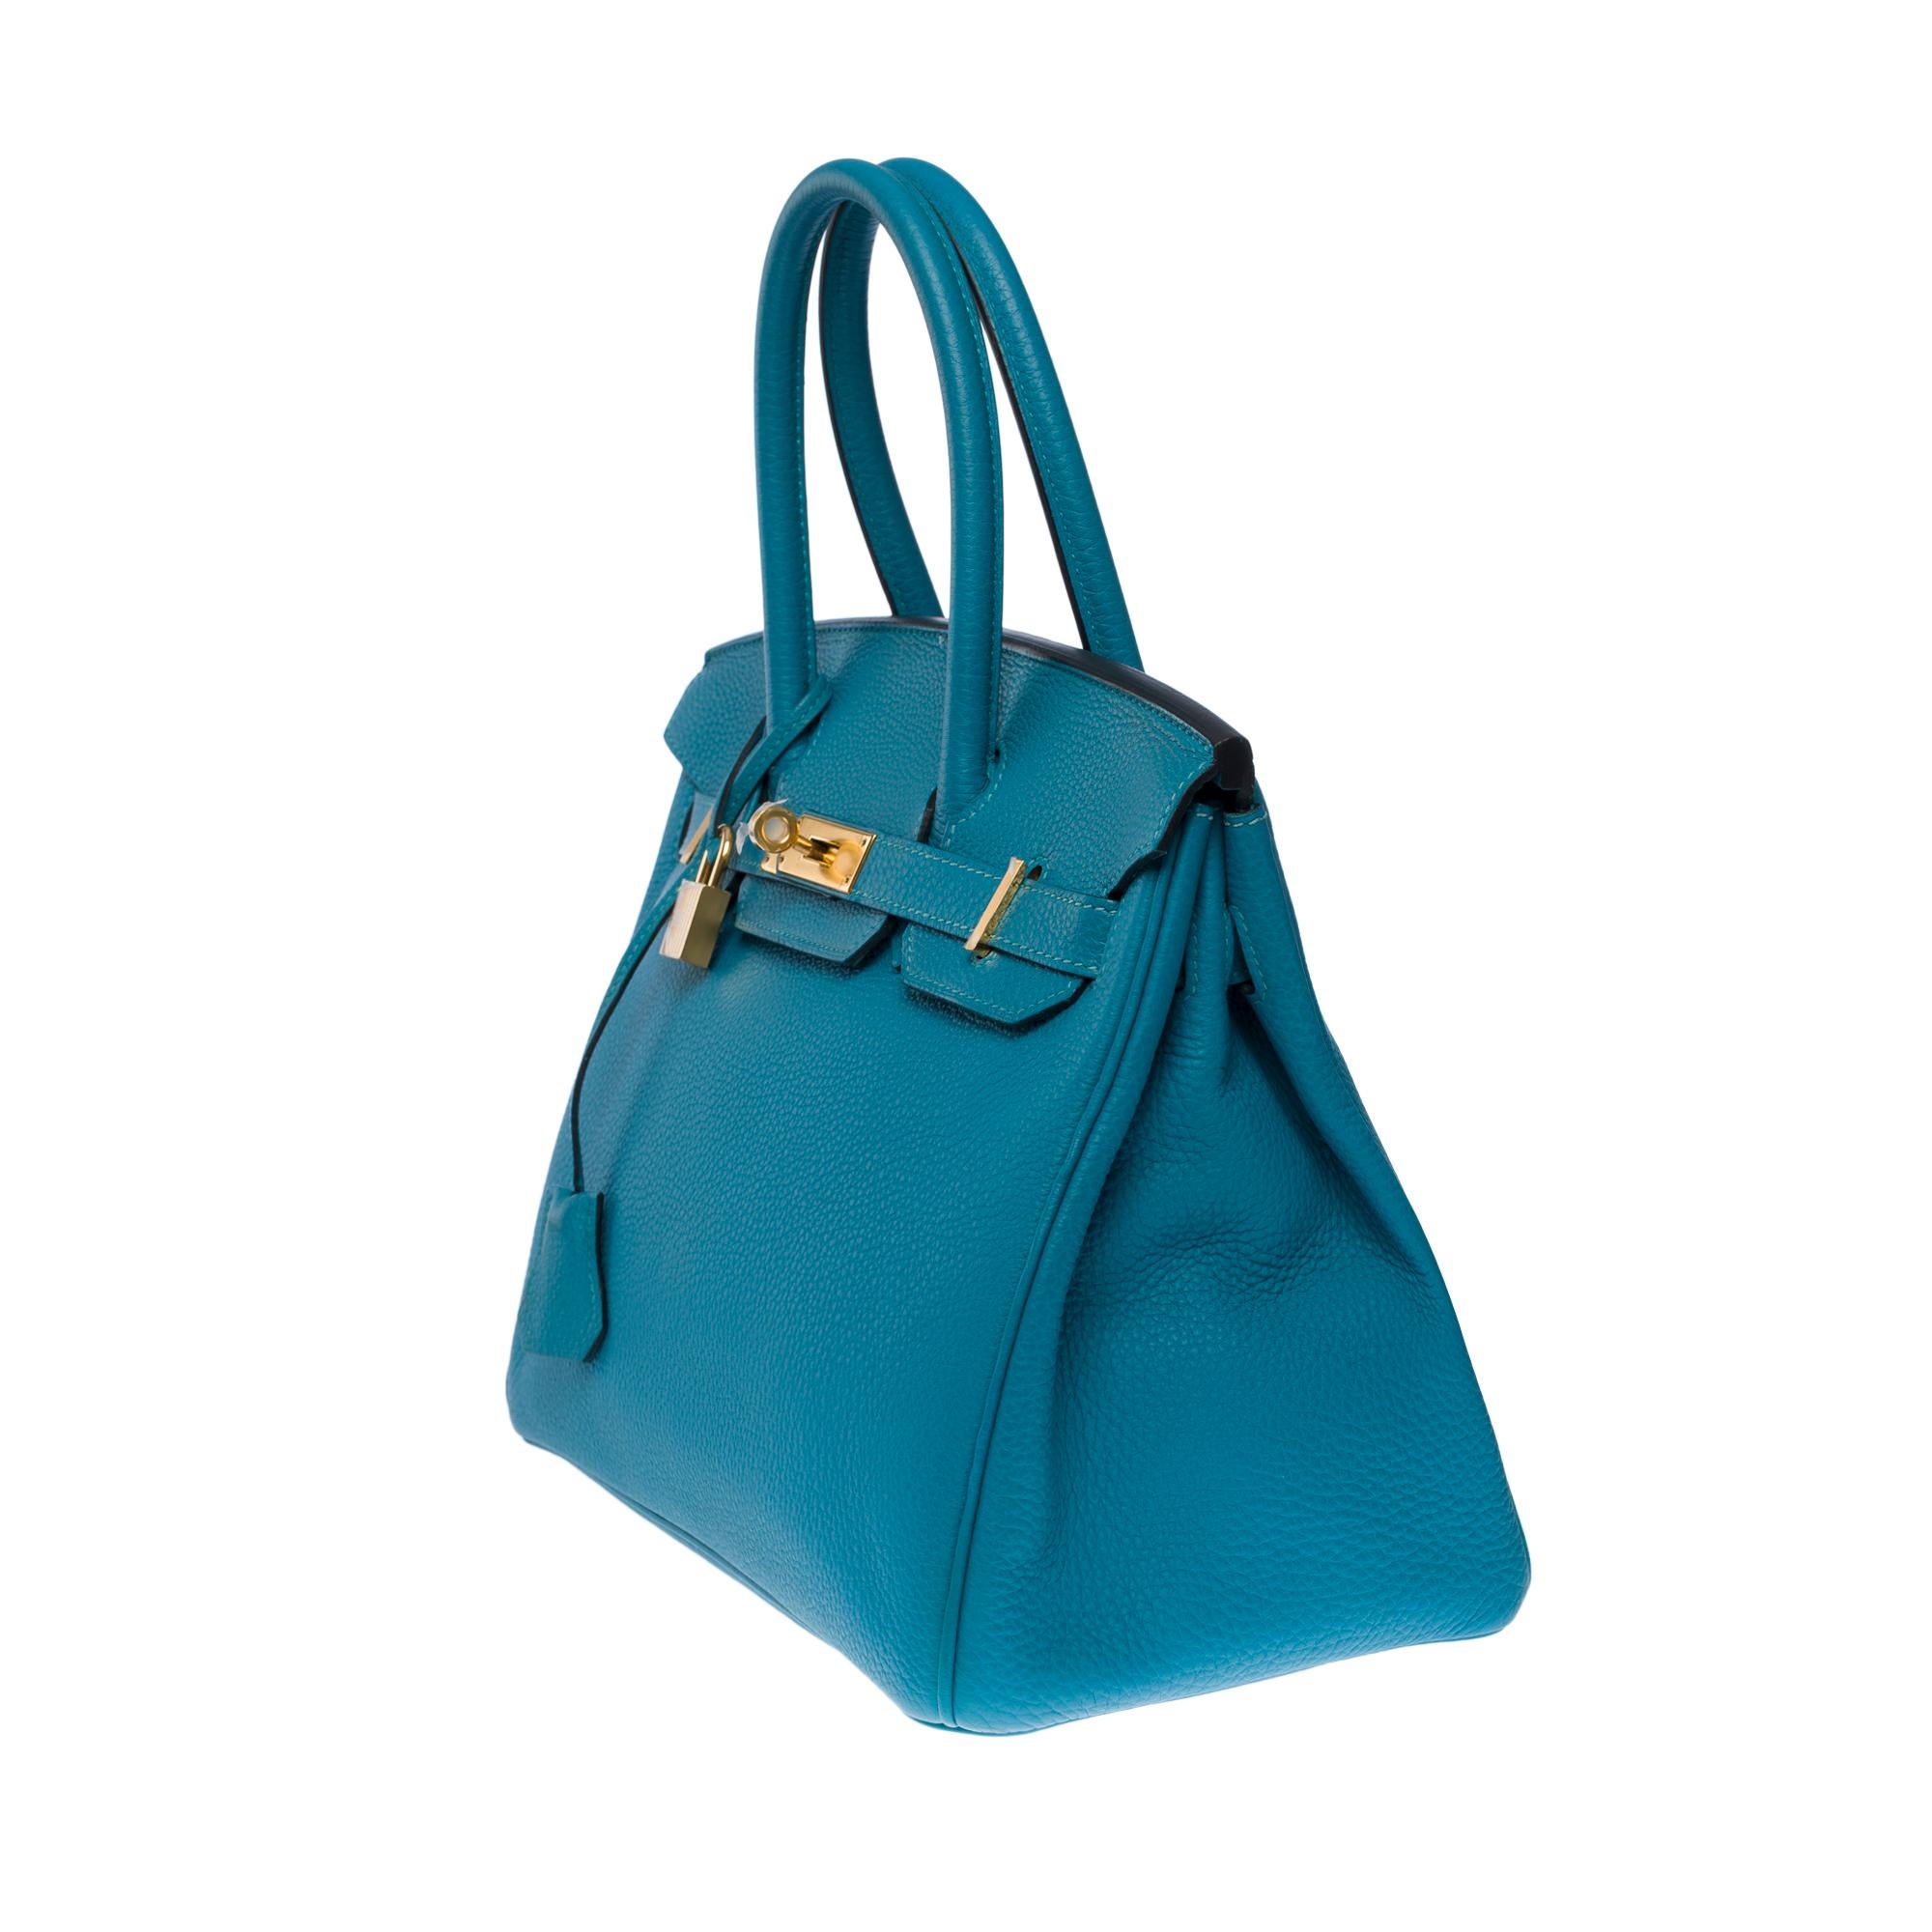 Blue Amazing New Hermès Birkin 30 handbag in Turquoise Togo leather, GHW For Sale